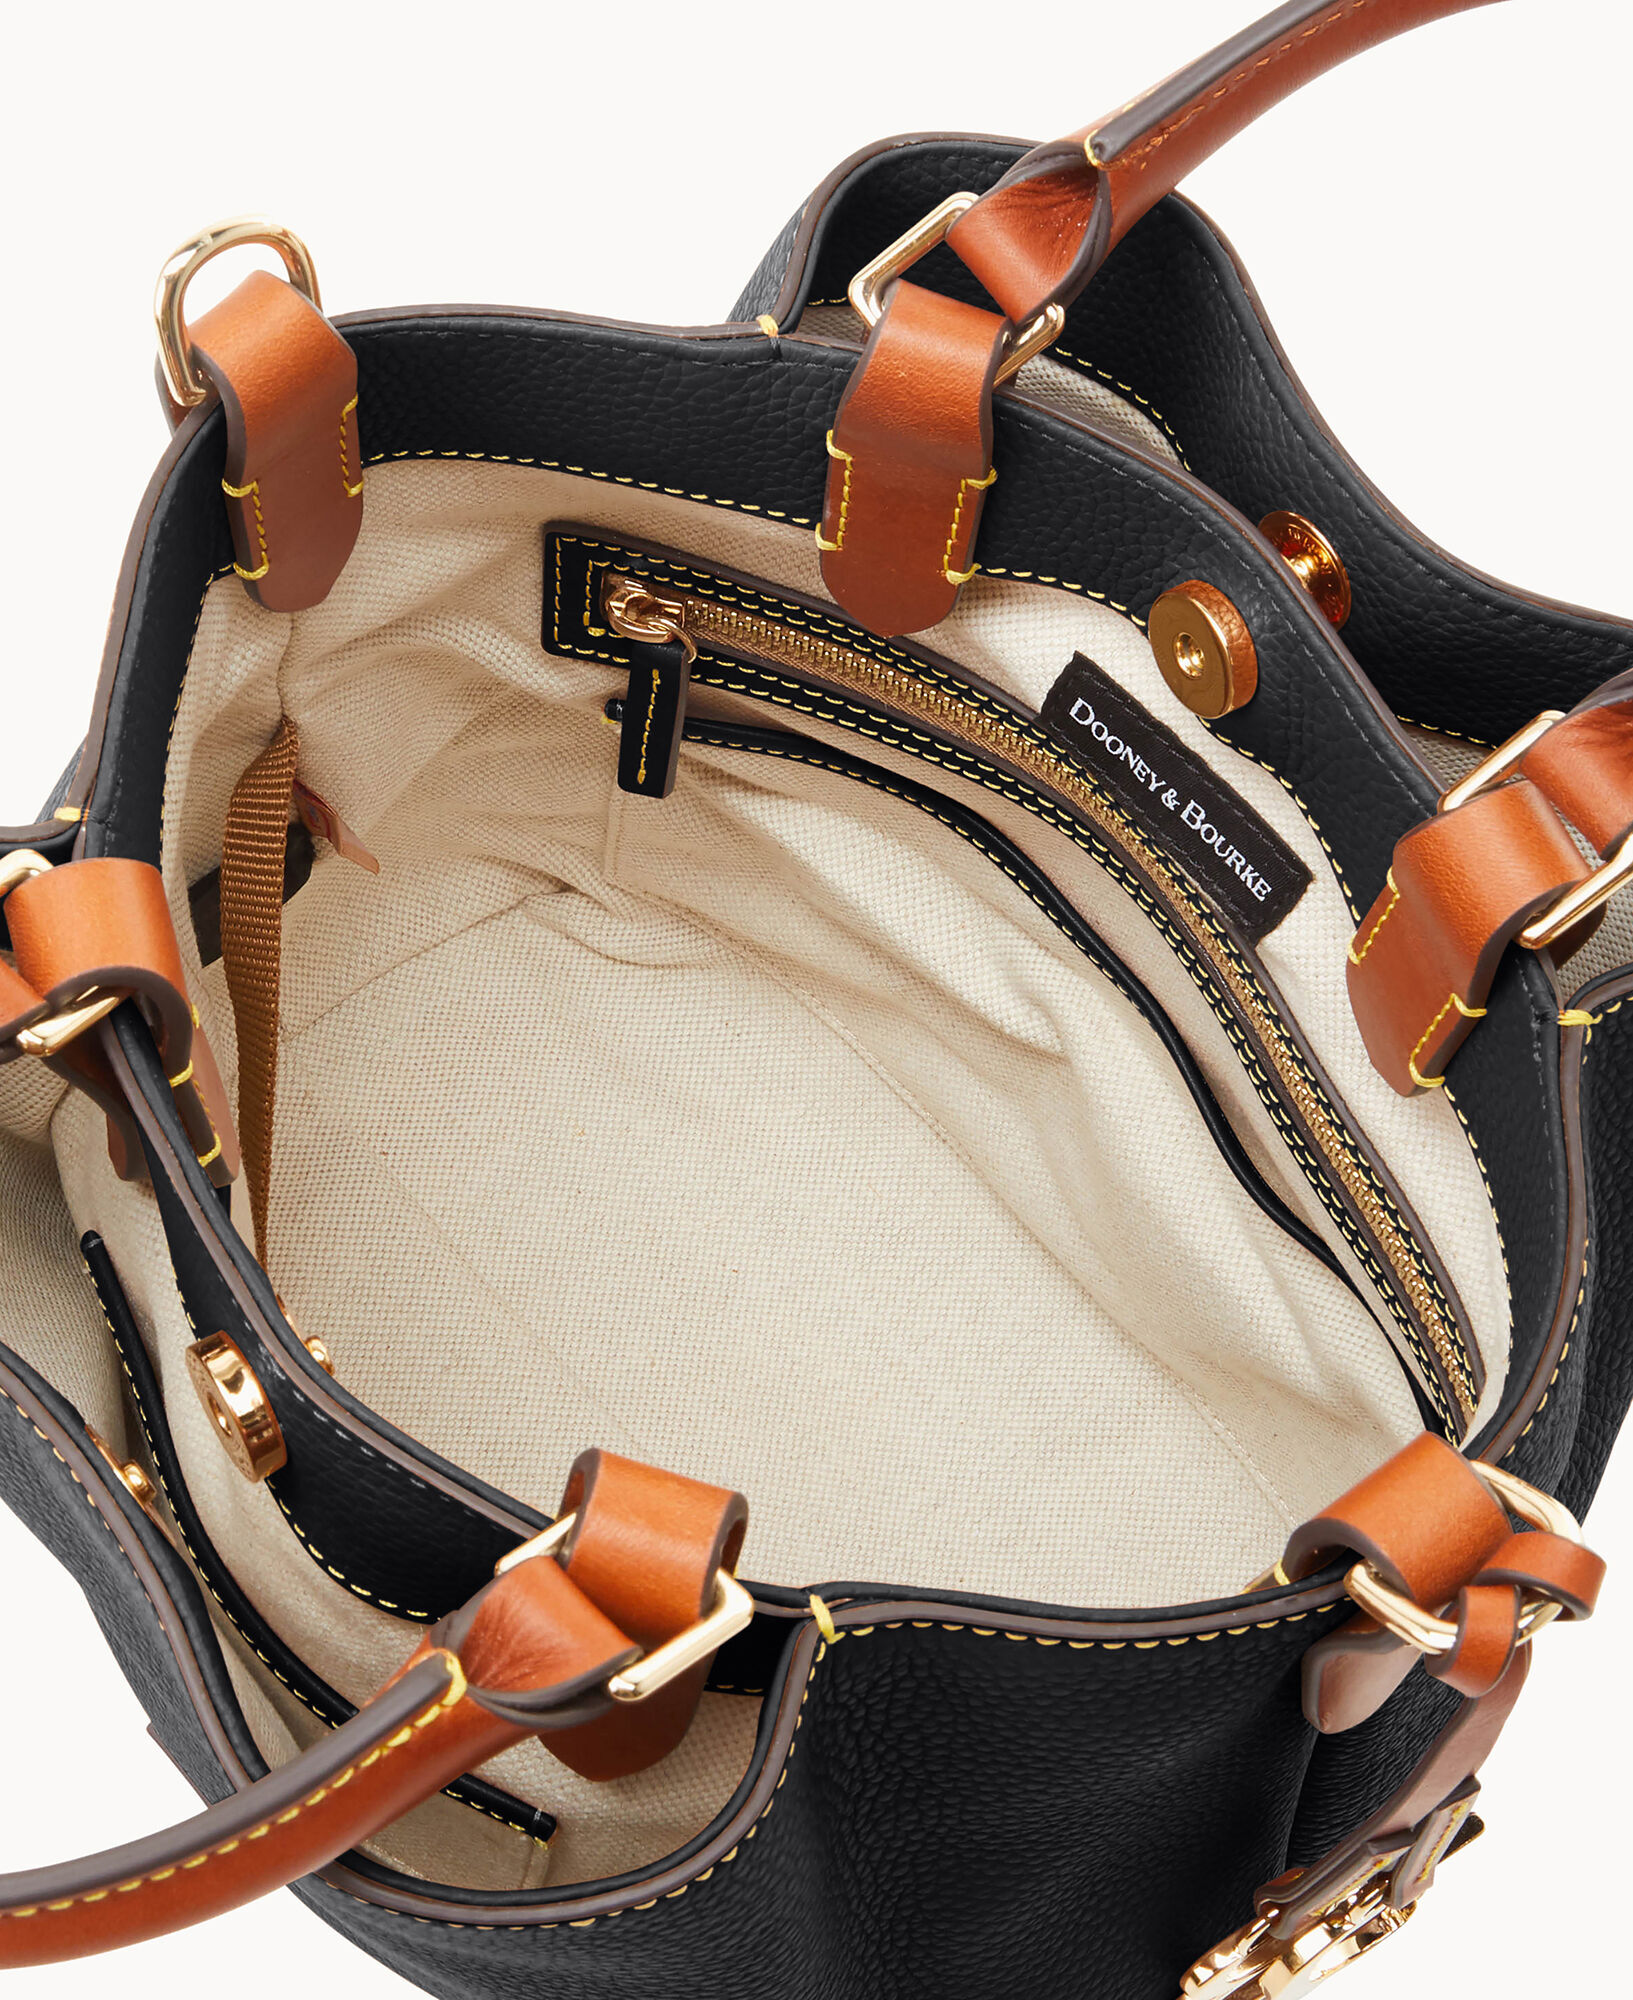 Dooney & Bourke Dooney & Bourke Mini Barlow Convertible Tote Bag in Saddle  at Nordstrom Rack